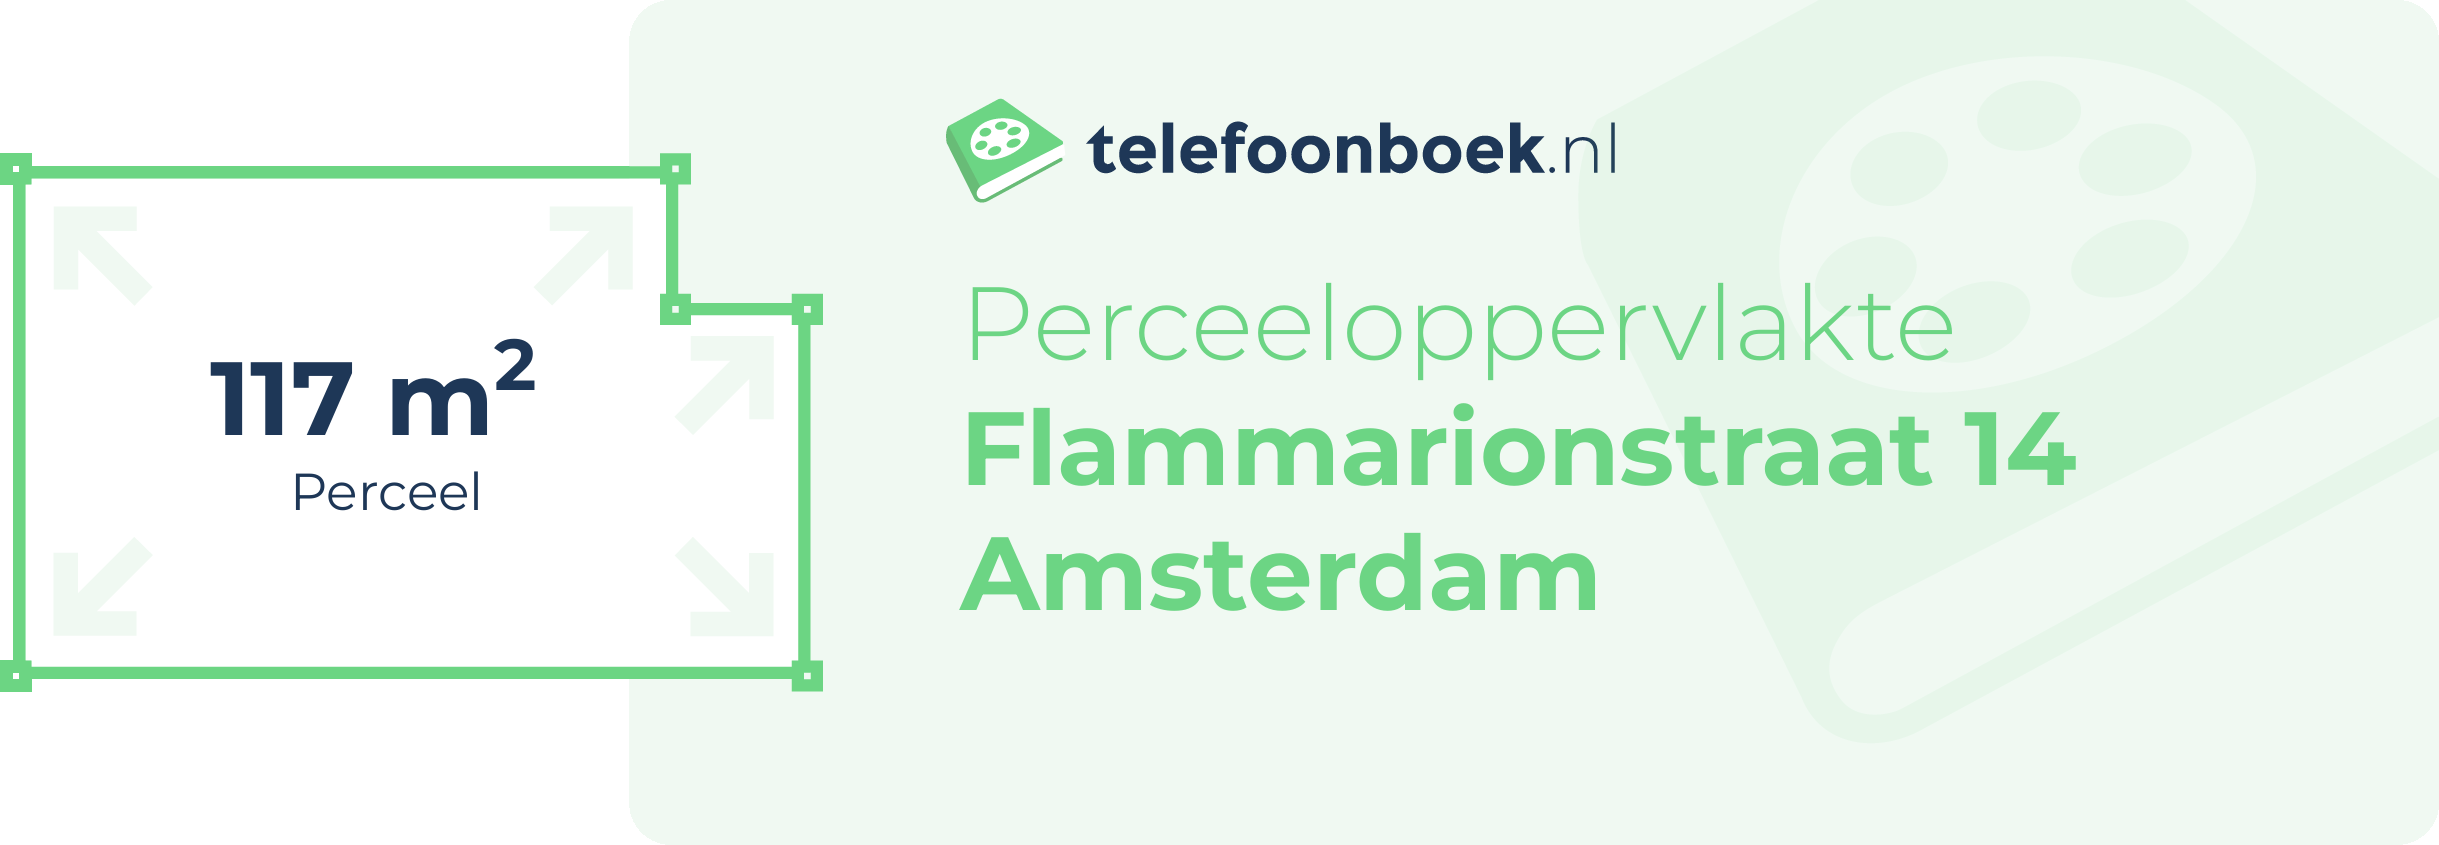 Perceeloppervlakte Flammarionstraat 14 Amsterdam